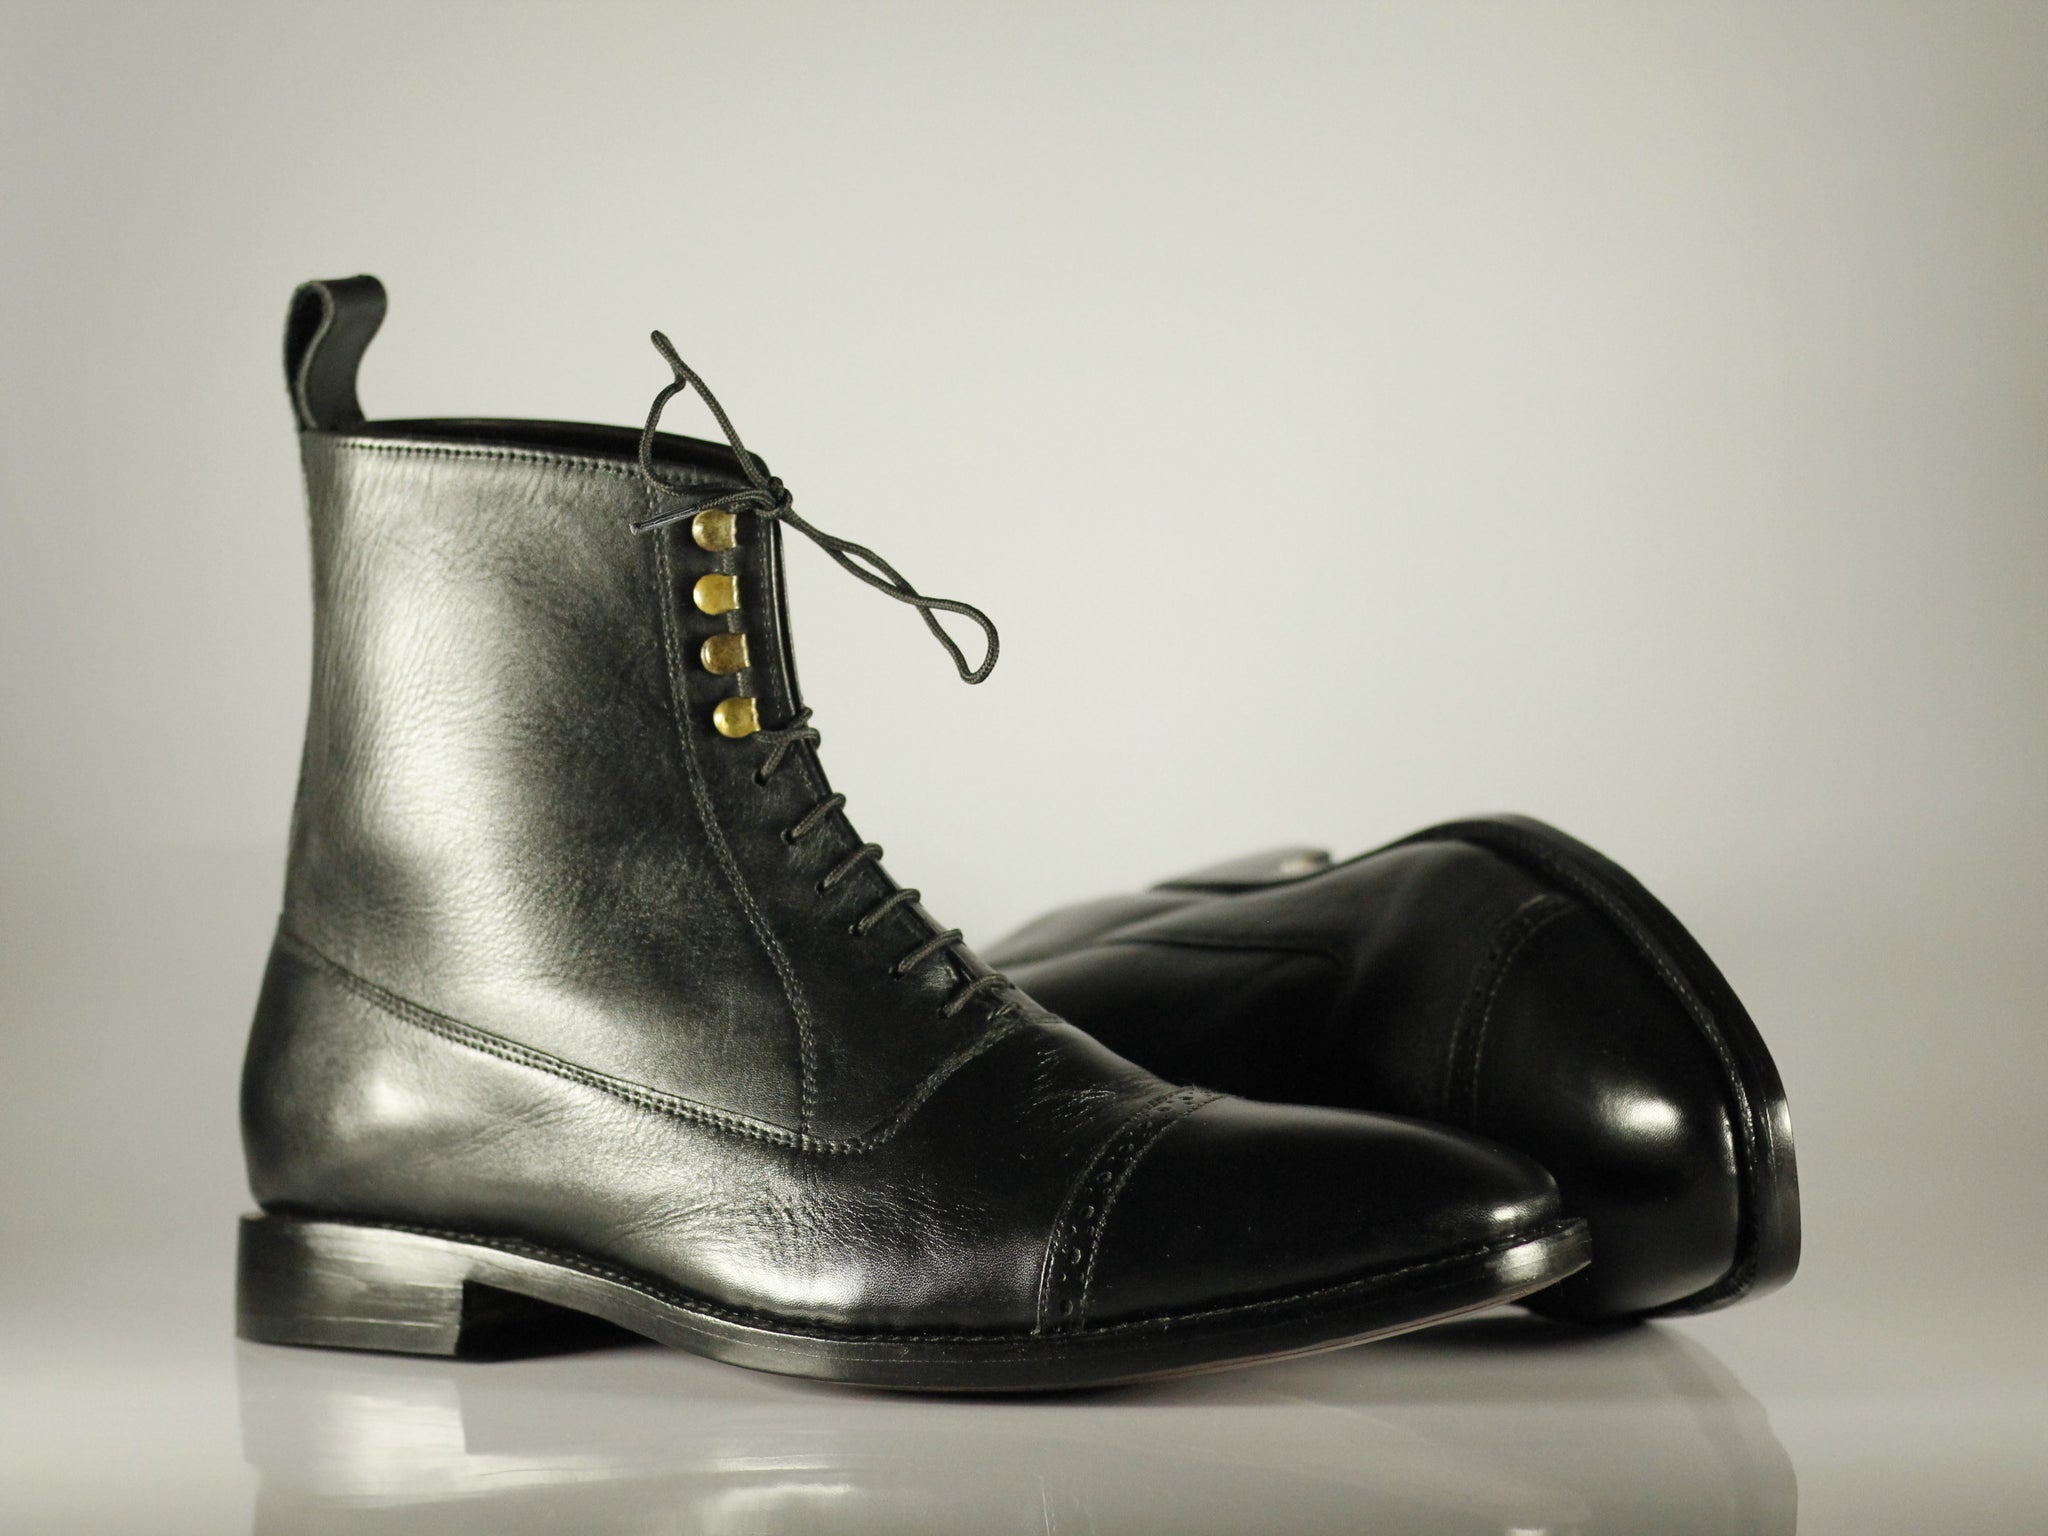 Handmade Men's Ankle High Cap Toe Leather Dress boots, Men Black